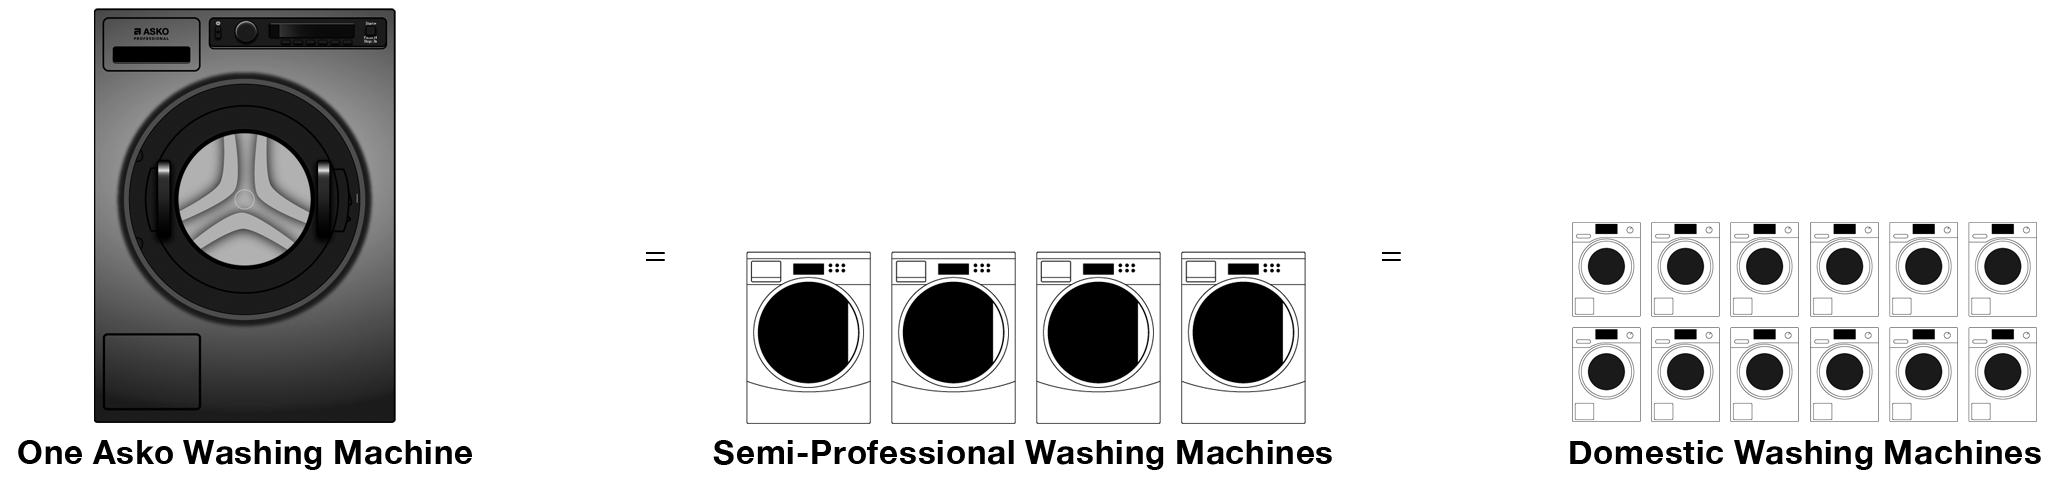 Illustration of usage of washing machines over lifetime